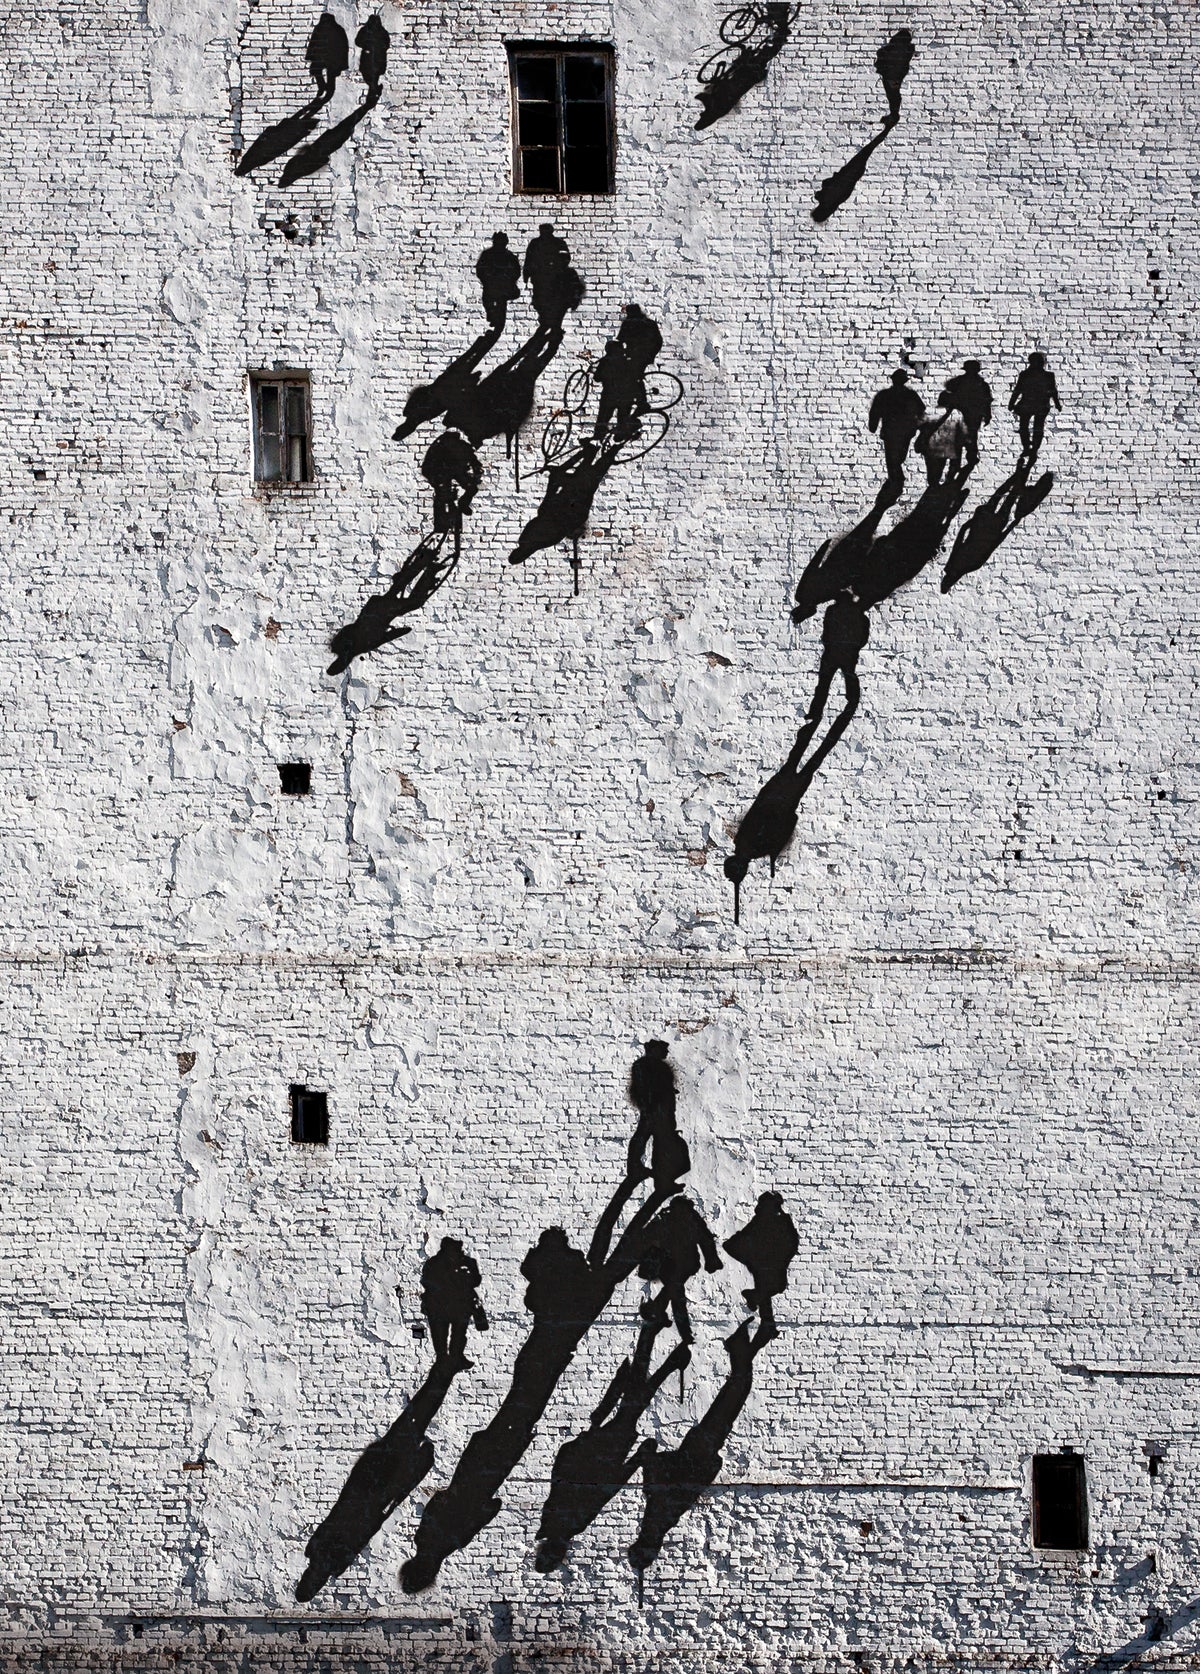 Edition Street Art - Walking the Wall